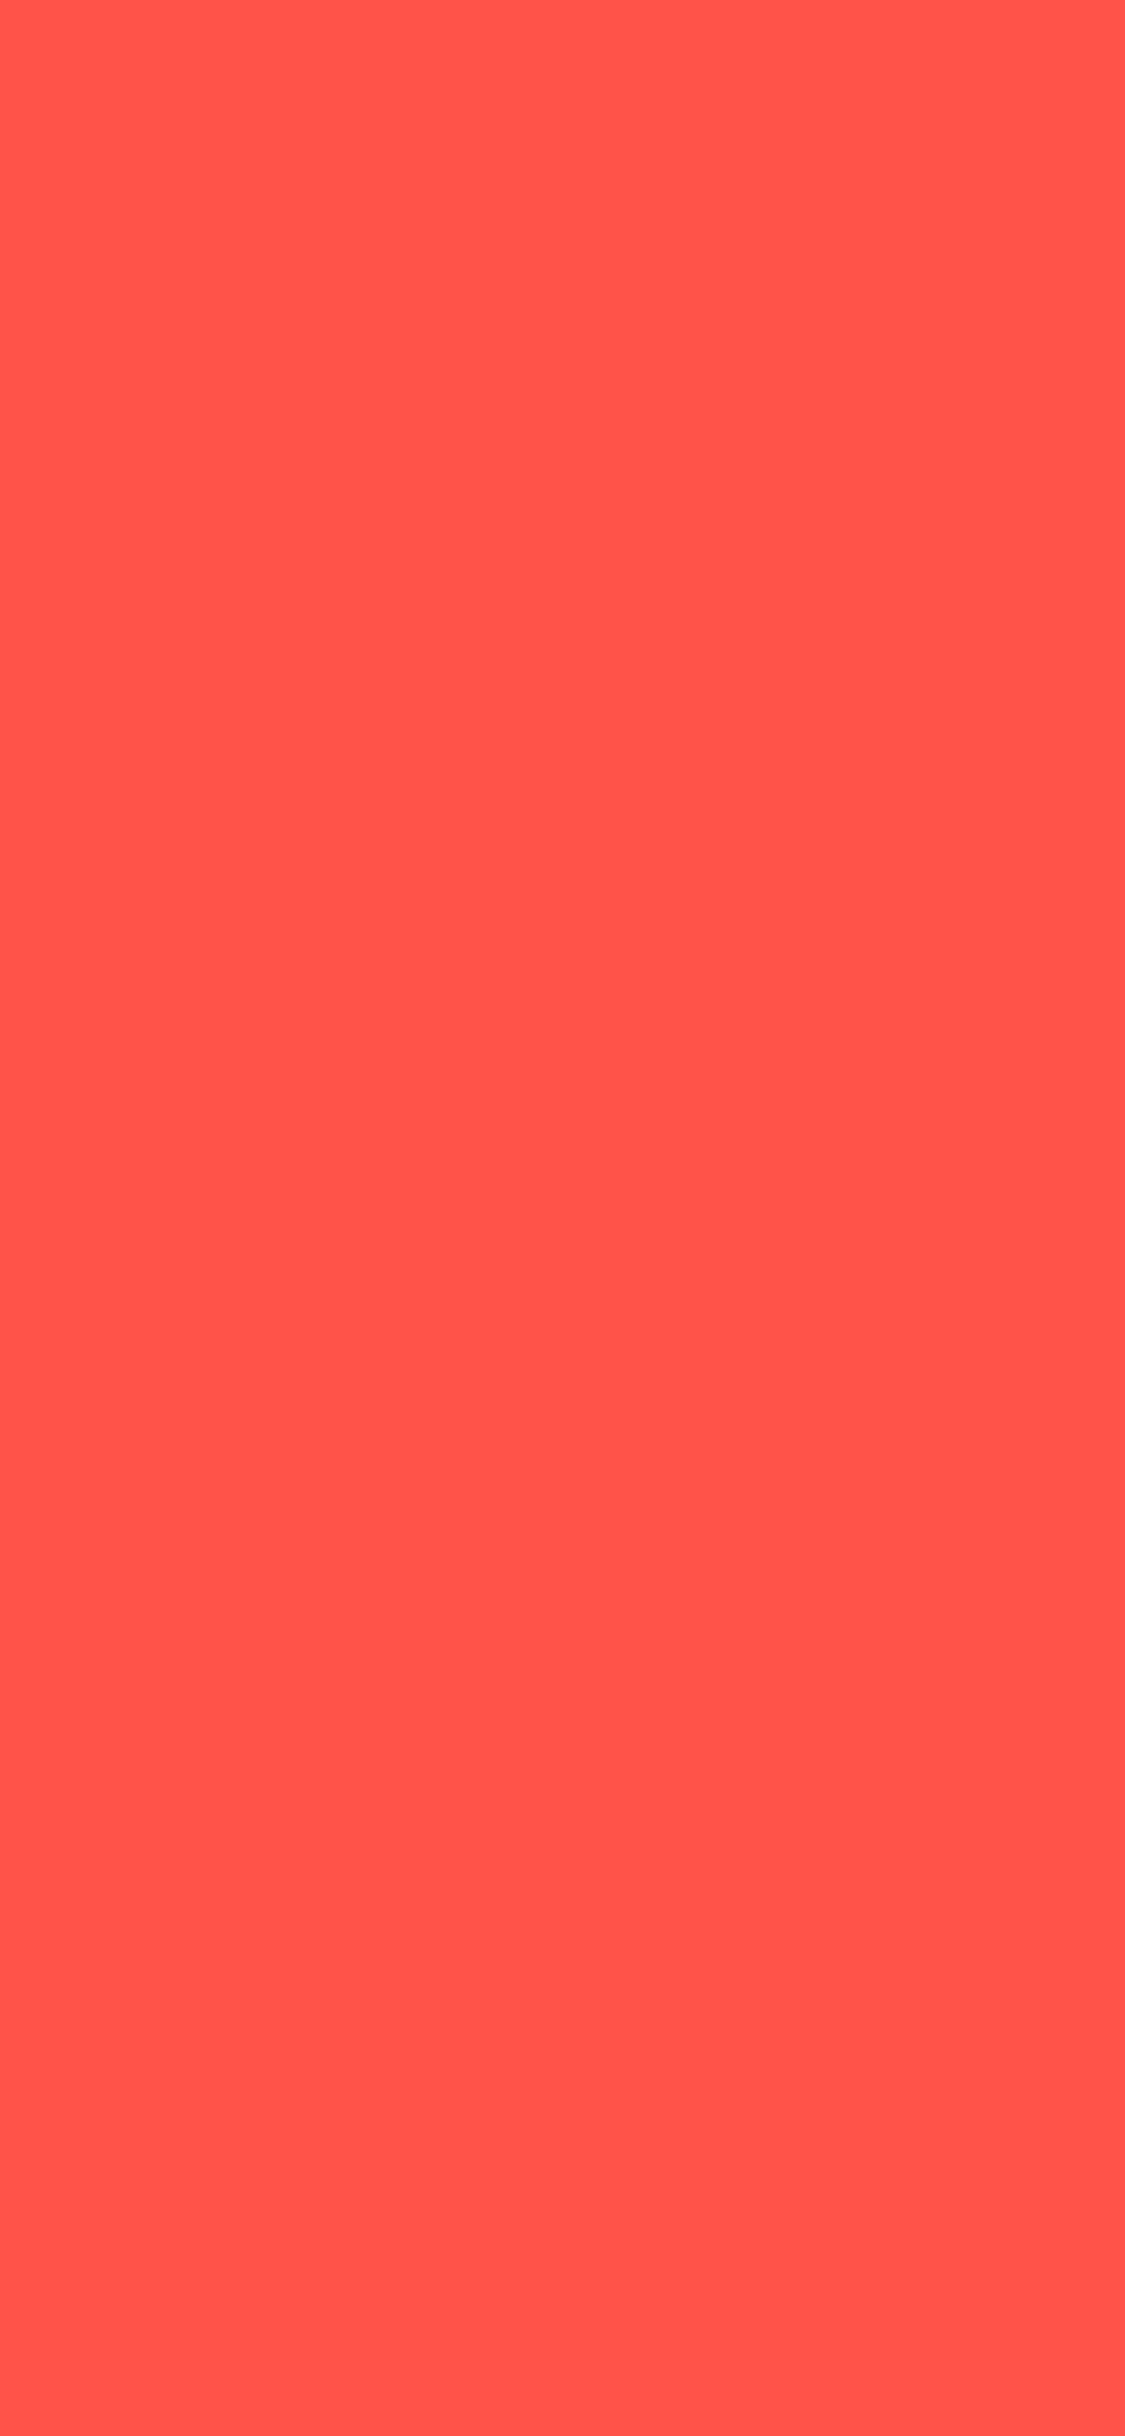 1125x2436 Red-orange Solid Color Background